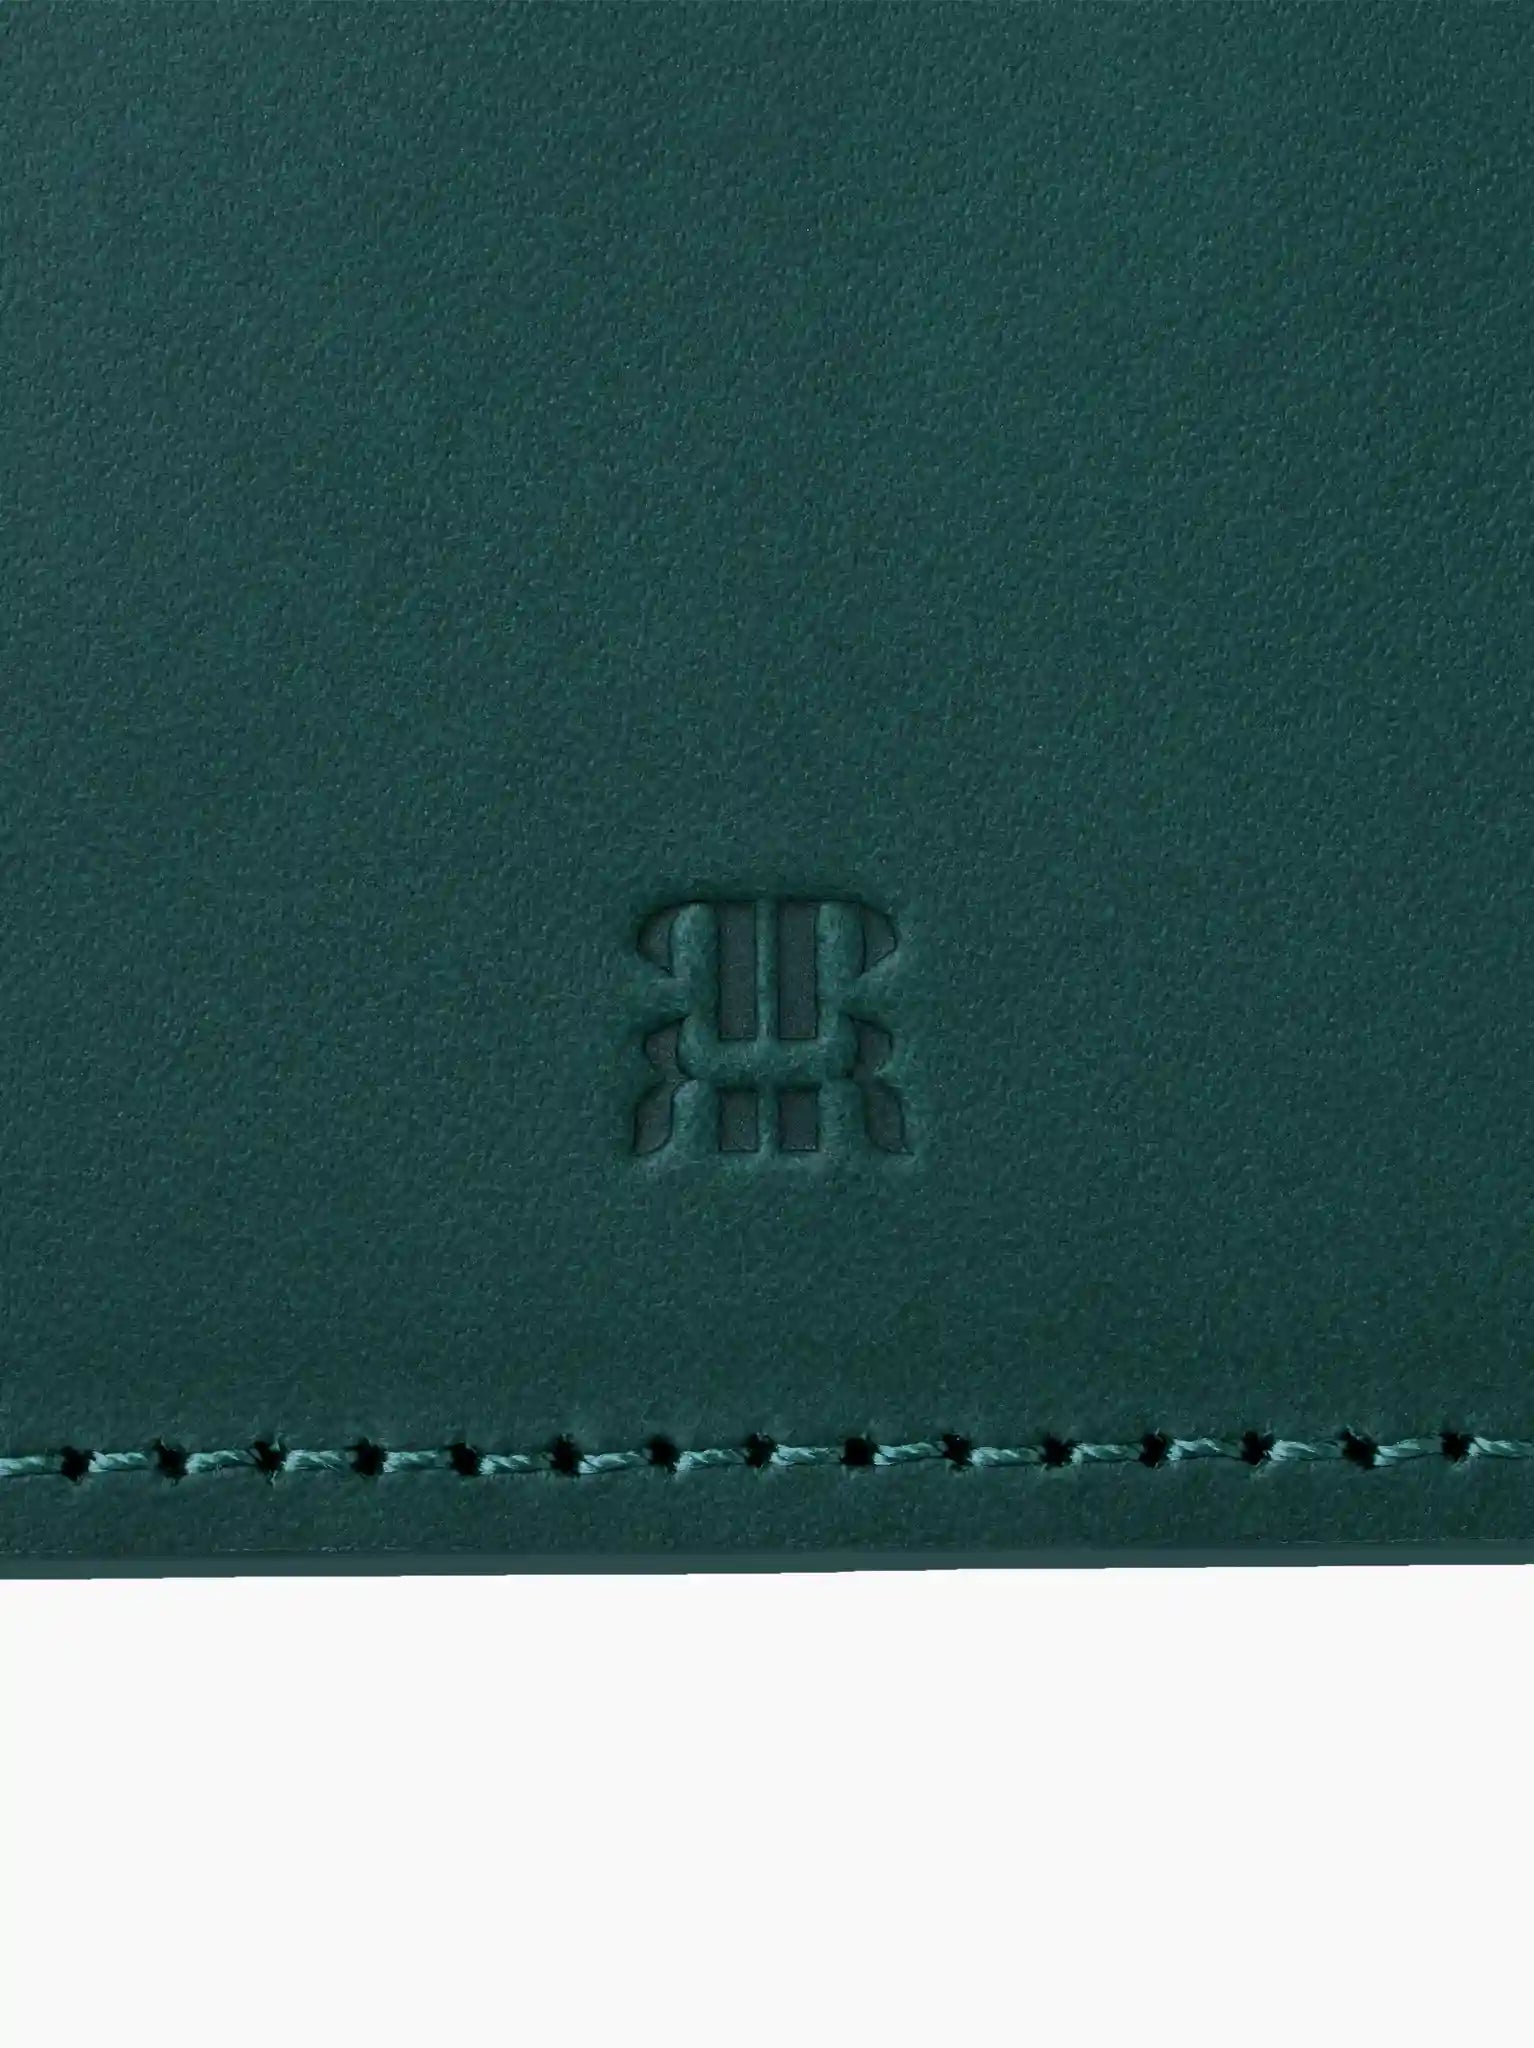 Green Leather Passport Holder